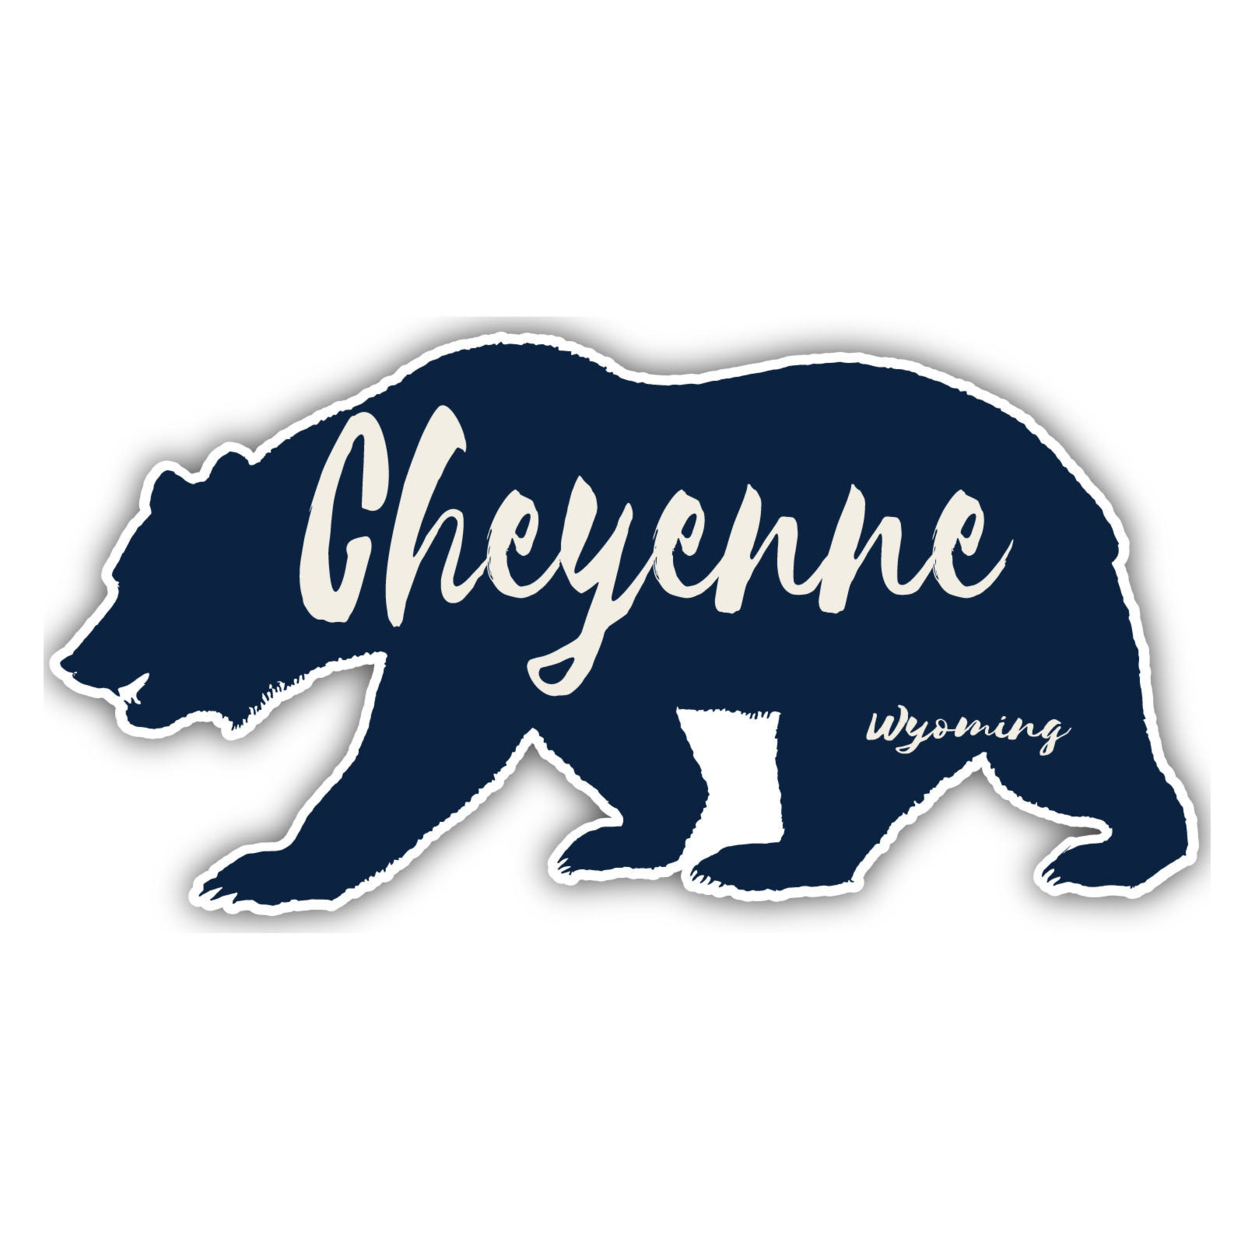 Cheyenne Wyoming Souvenir Decorative Stickers (Choose Theme And Size) - Single Unit, 8-Inch, Bear